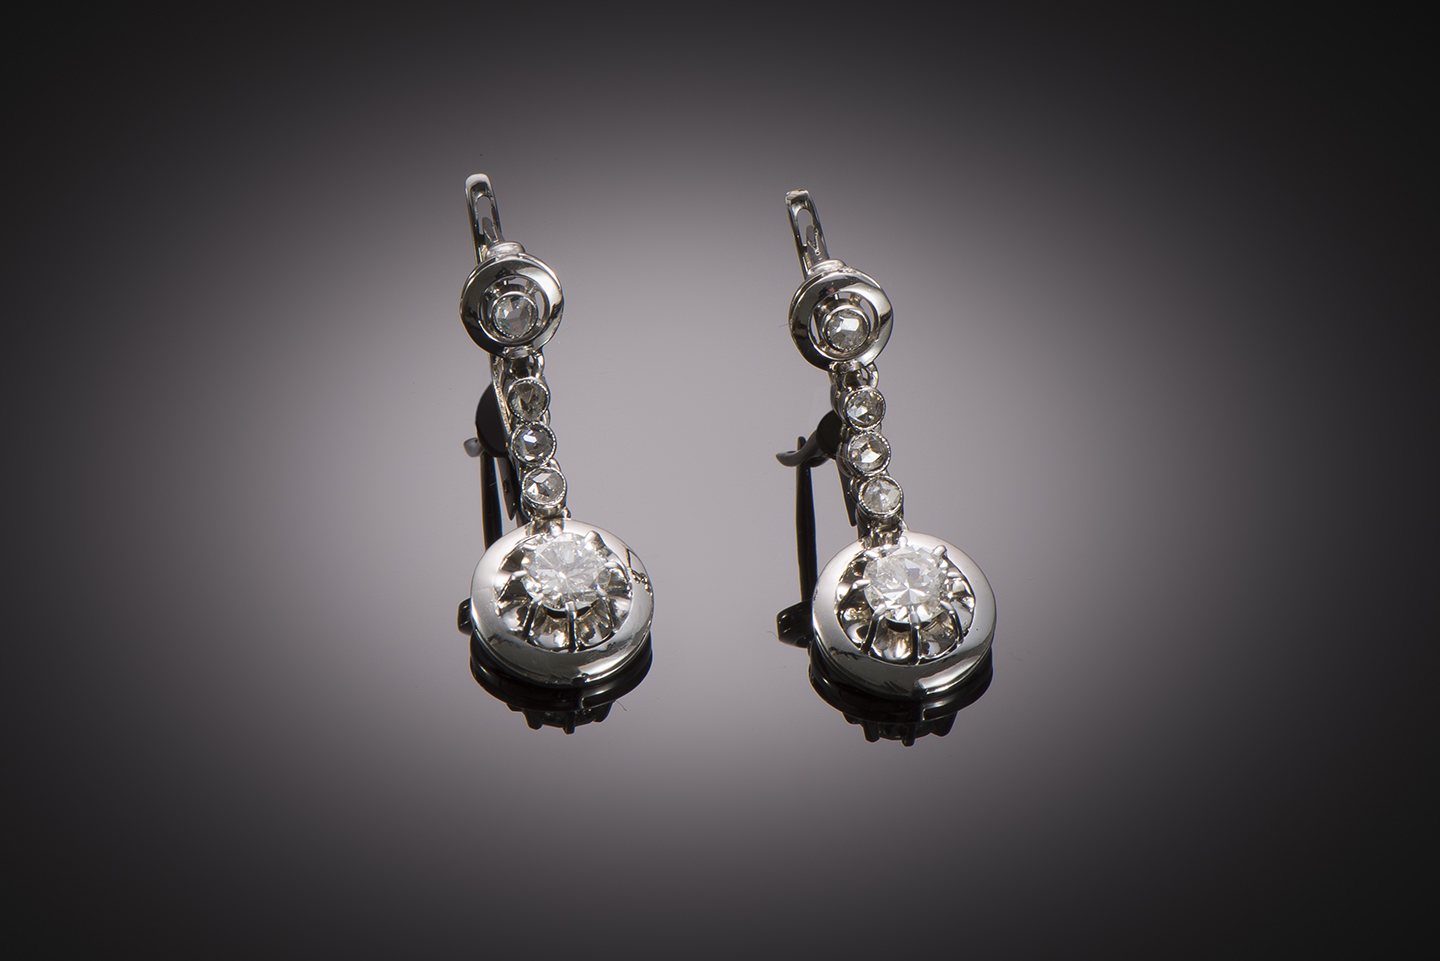 French Art Deco diamond earrings (1 carat)-1